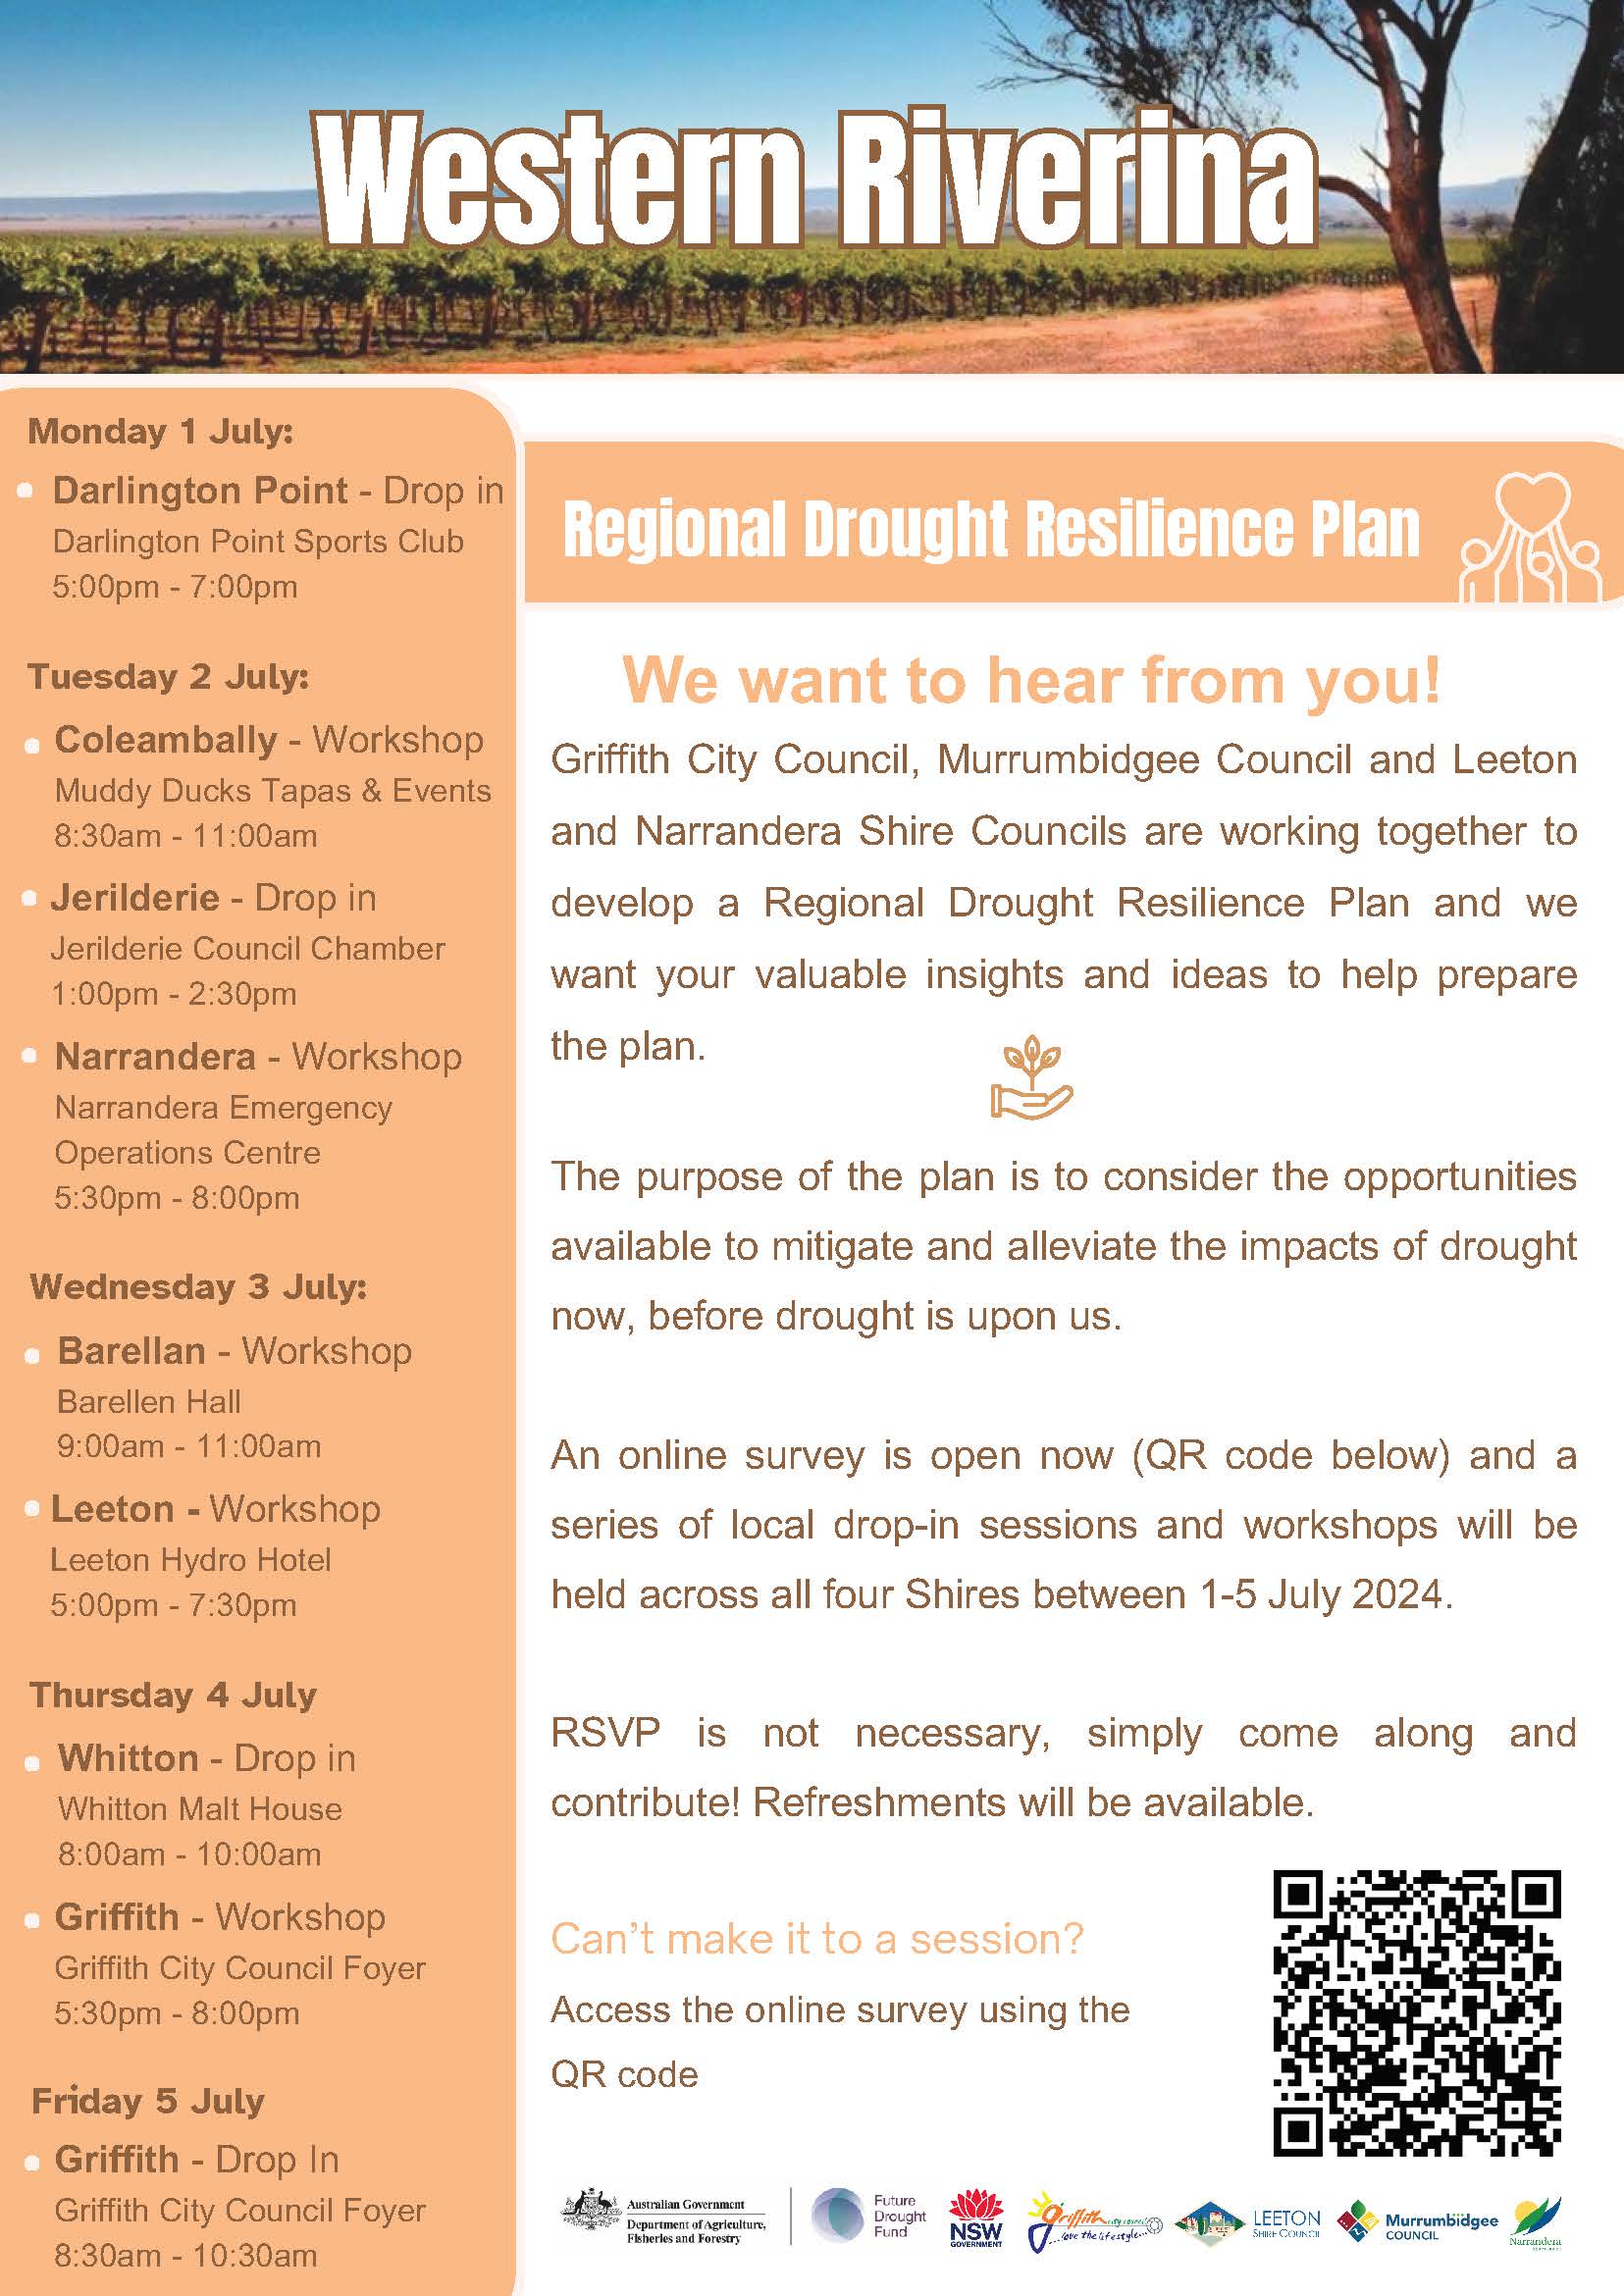 Regional Drought Resilience Plan - Darlington Point